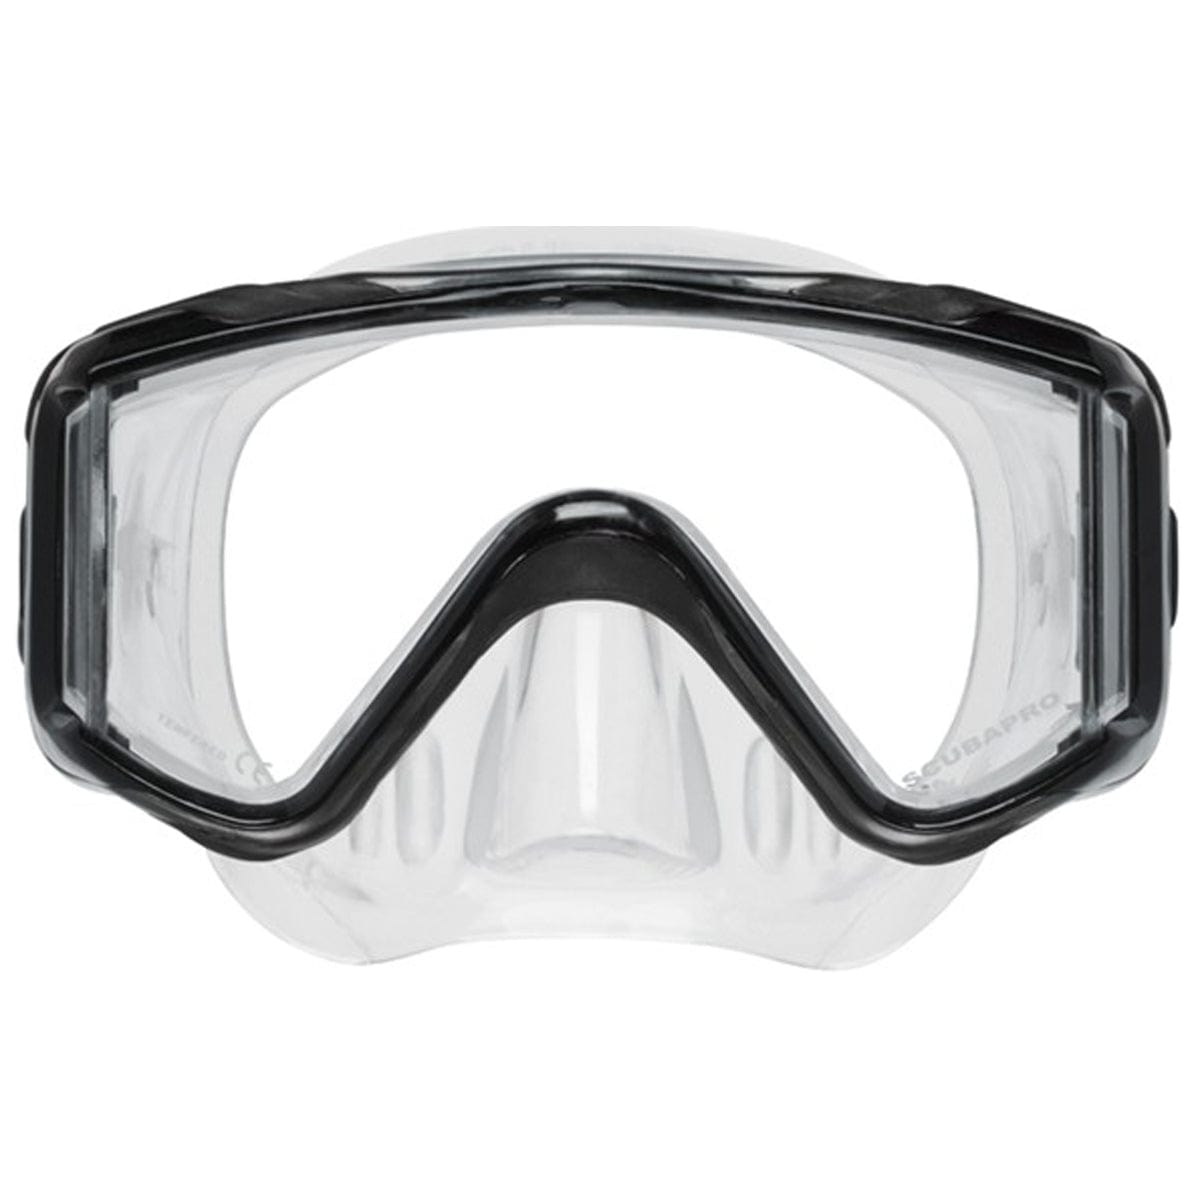 Scubapro Crystal VU Plus w/o Purge Mask - Black/Gray-Clear Skirt - 22